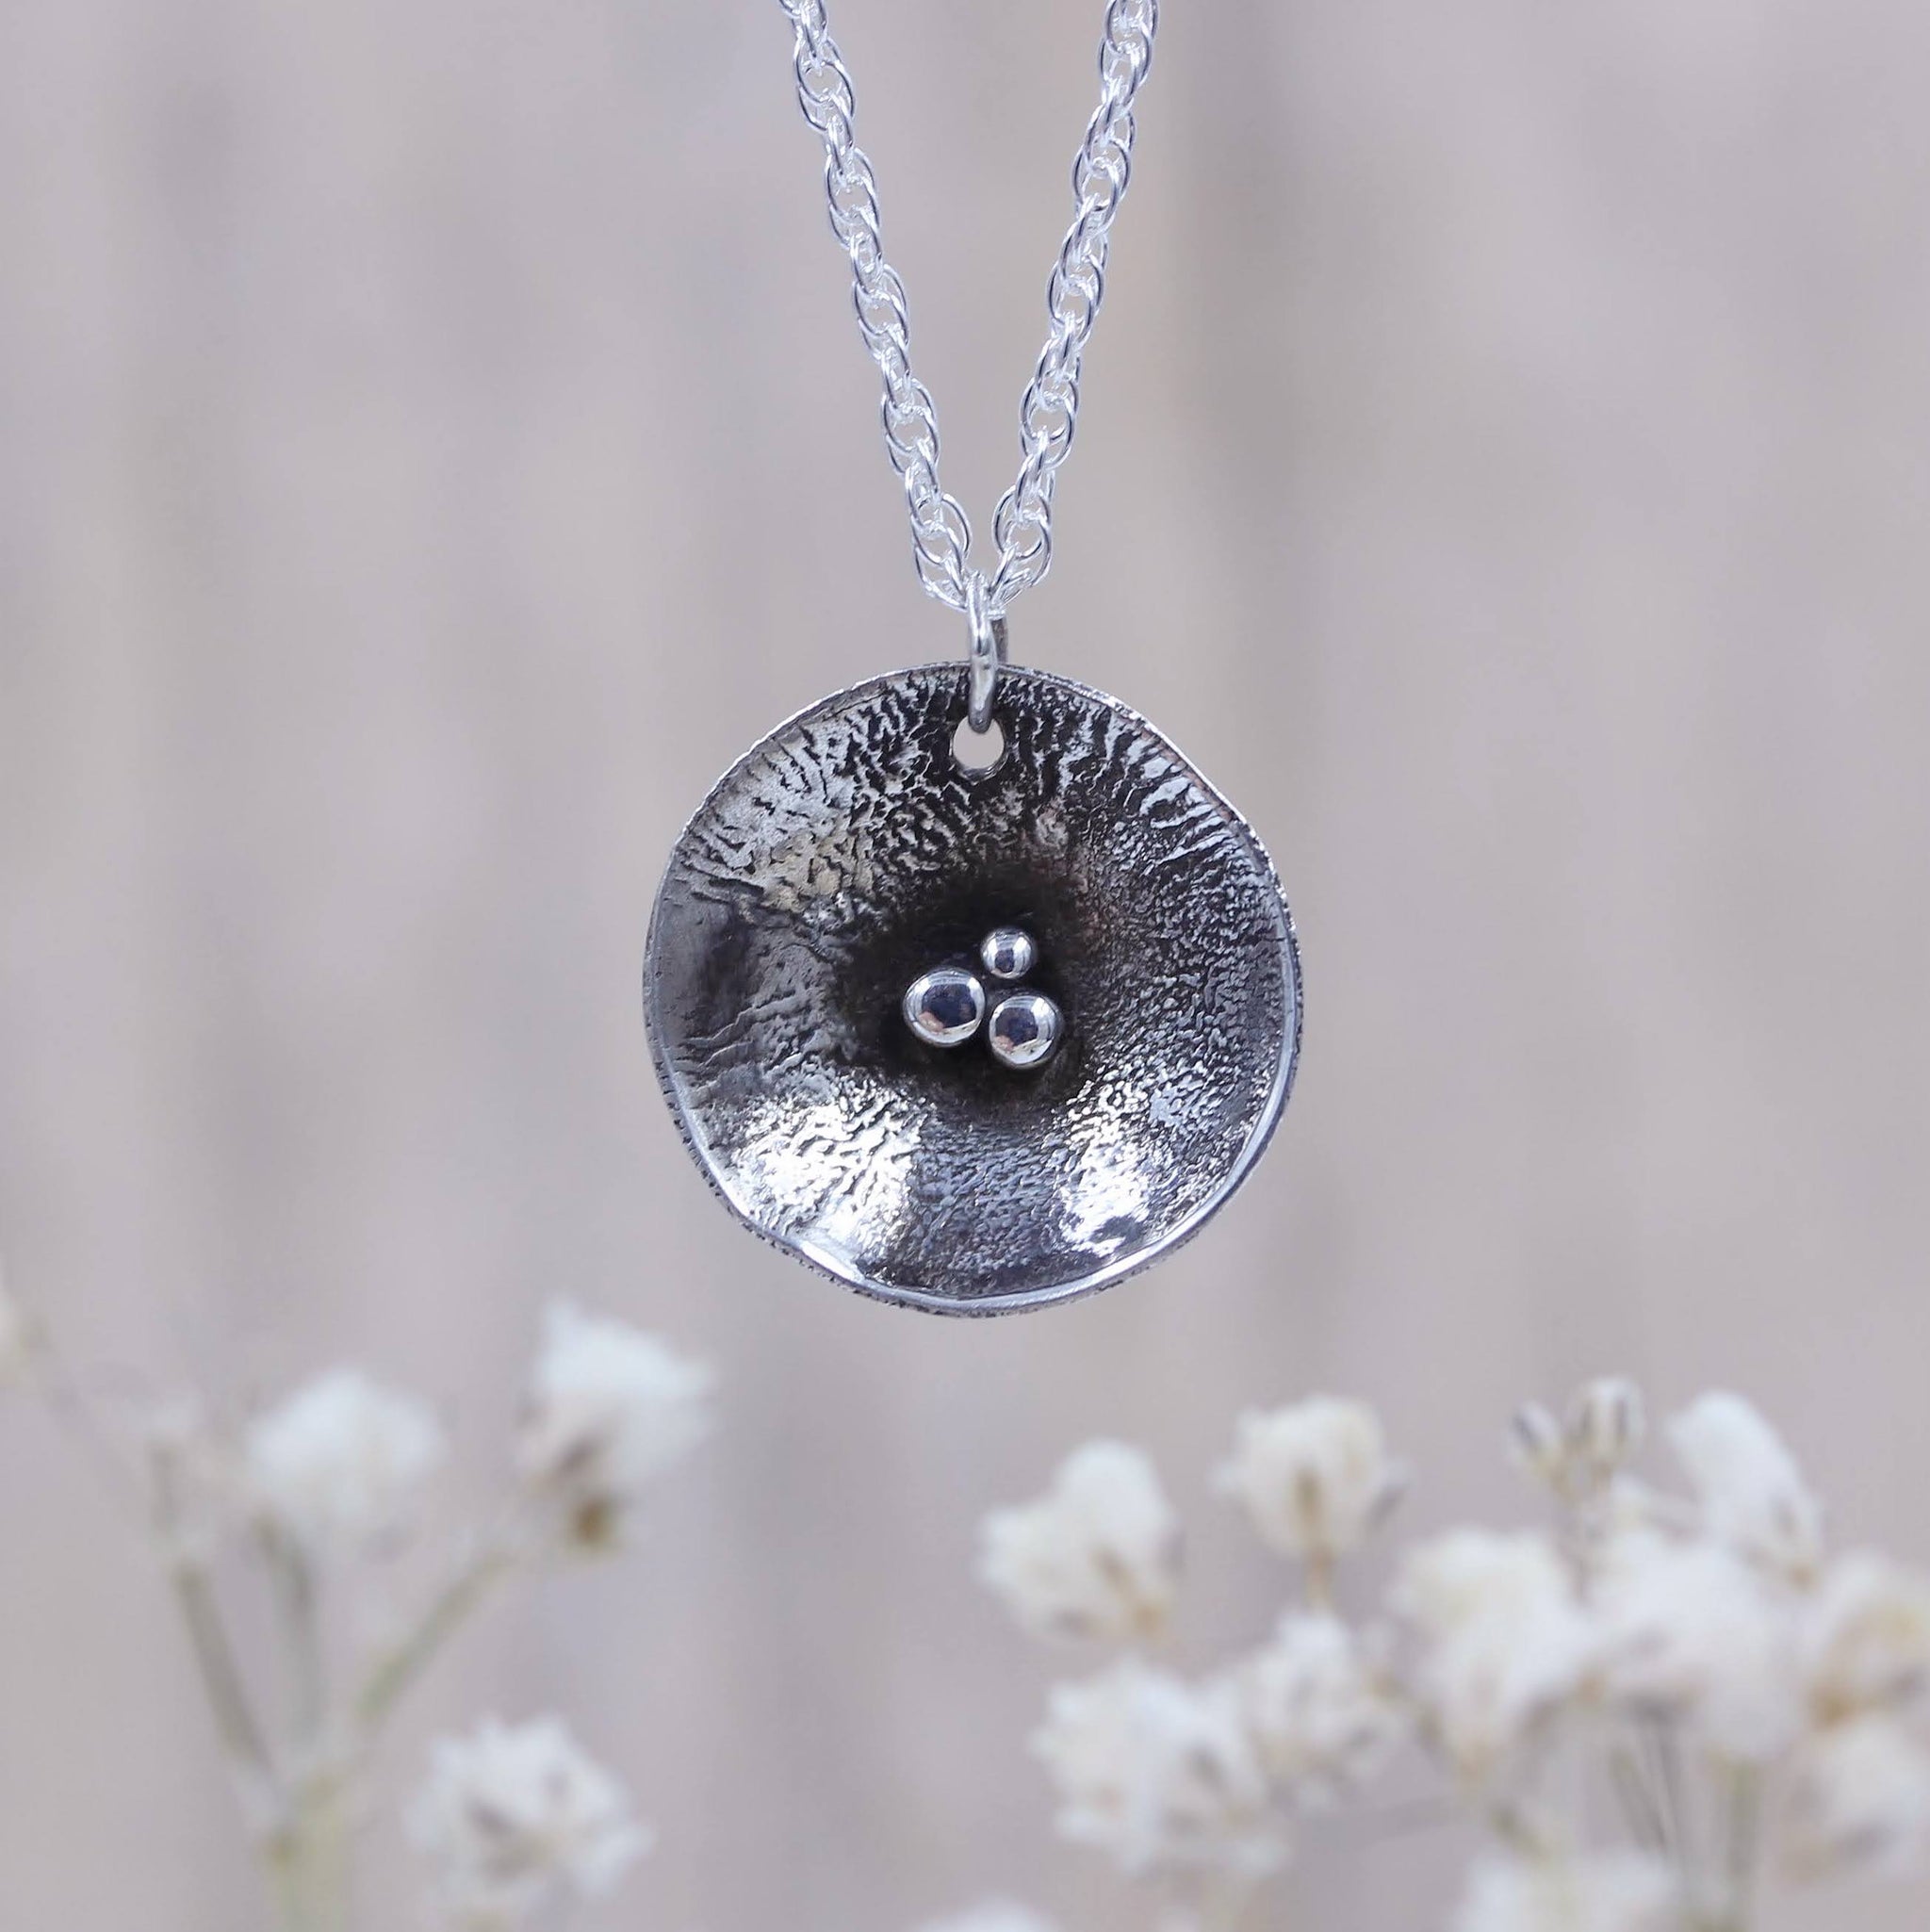 Sea inspired silver necklace handmade by Gemma Tremayne Jewellery